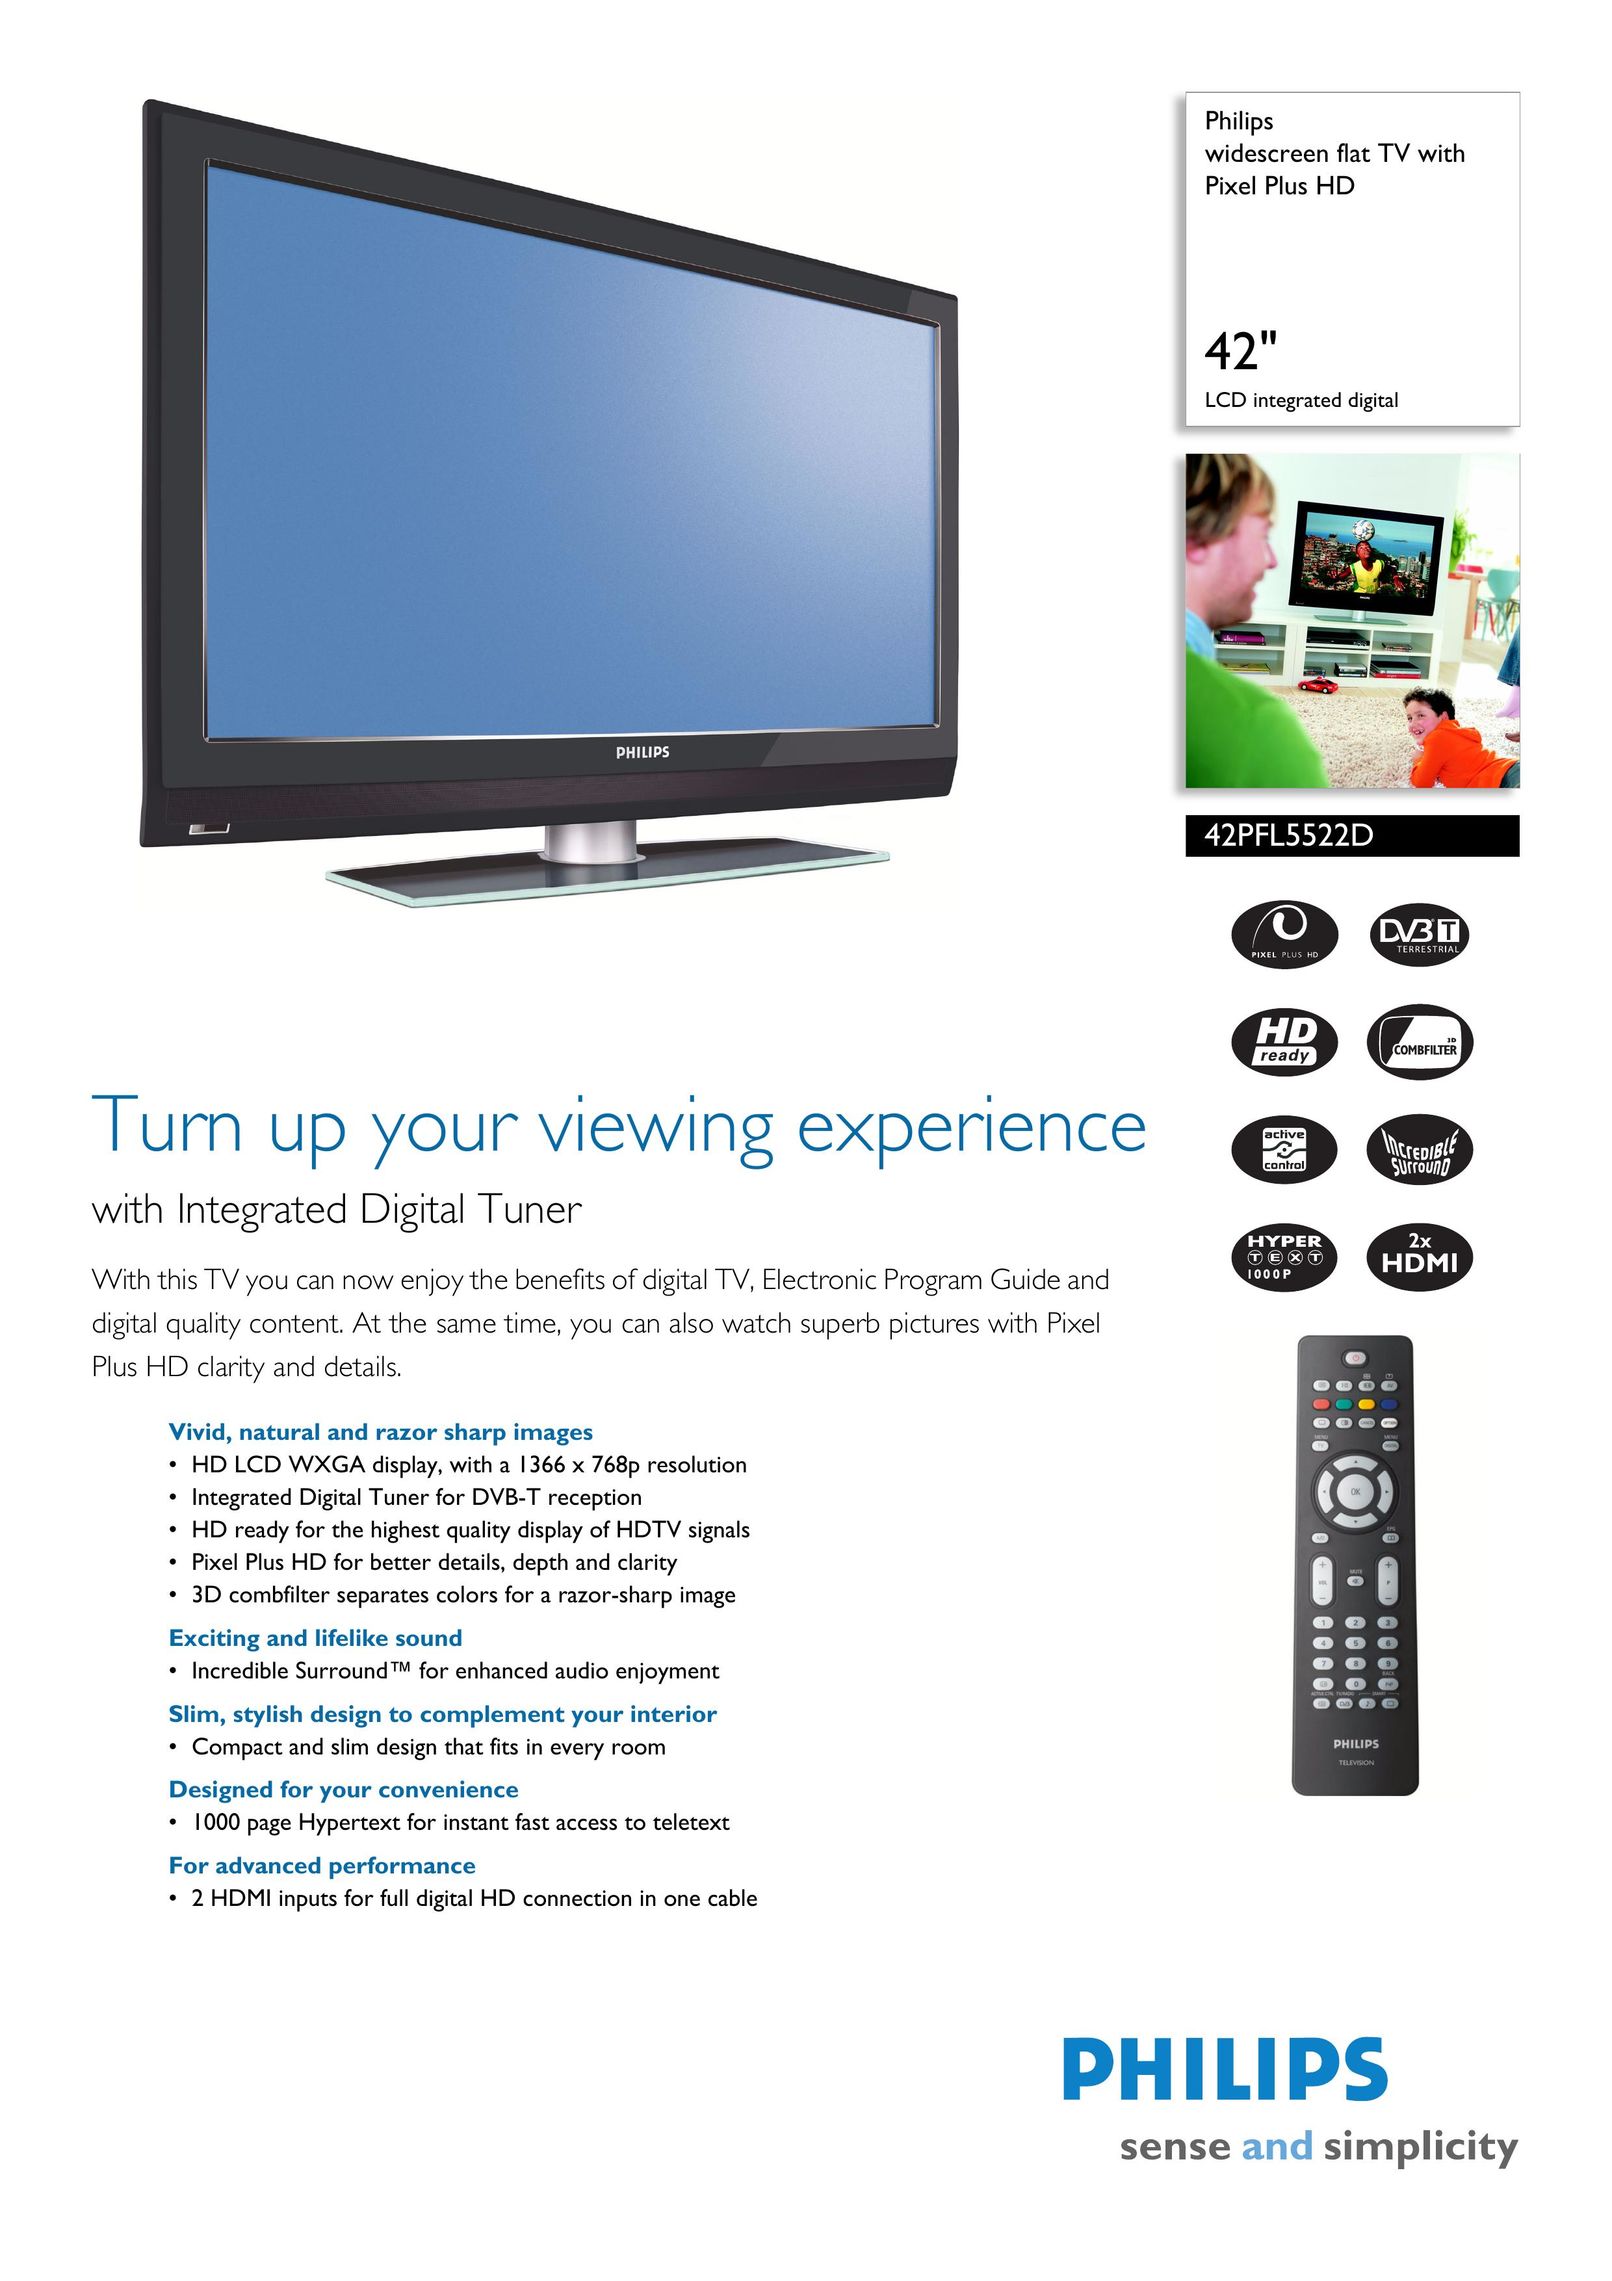 Pentax 42PFL5522D Flat Panel Television User Manual